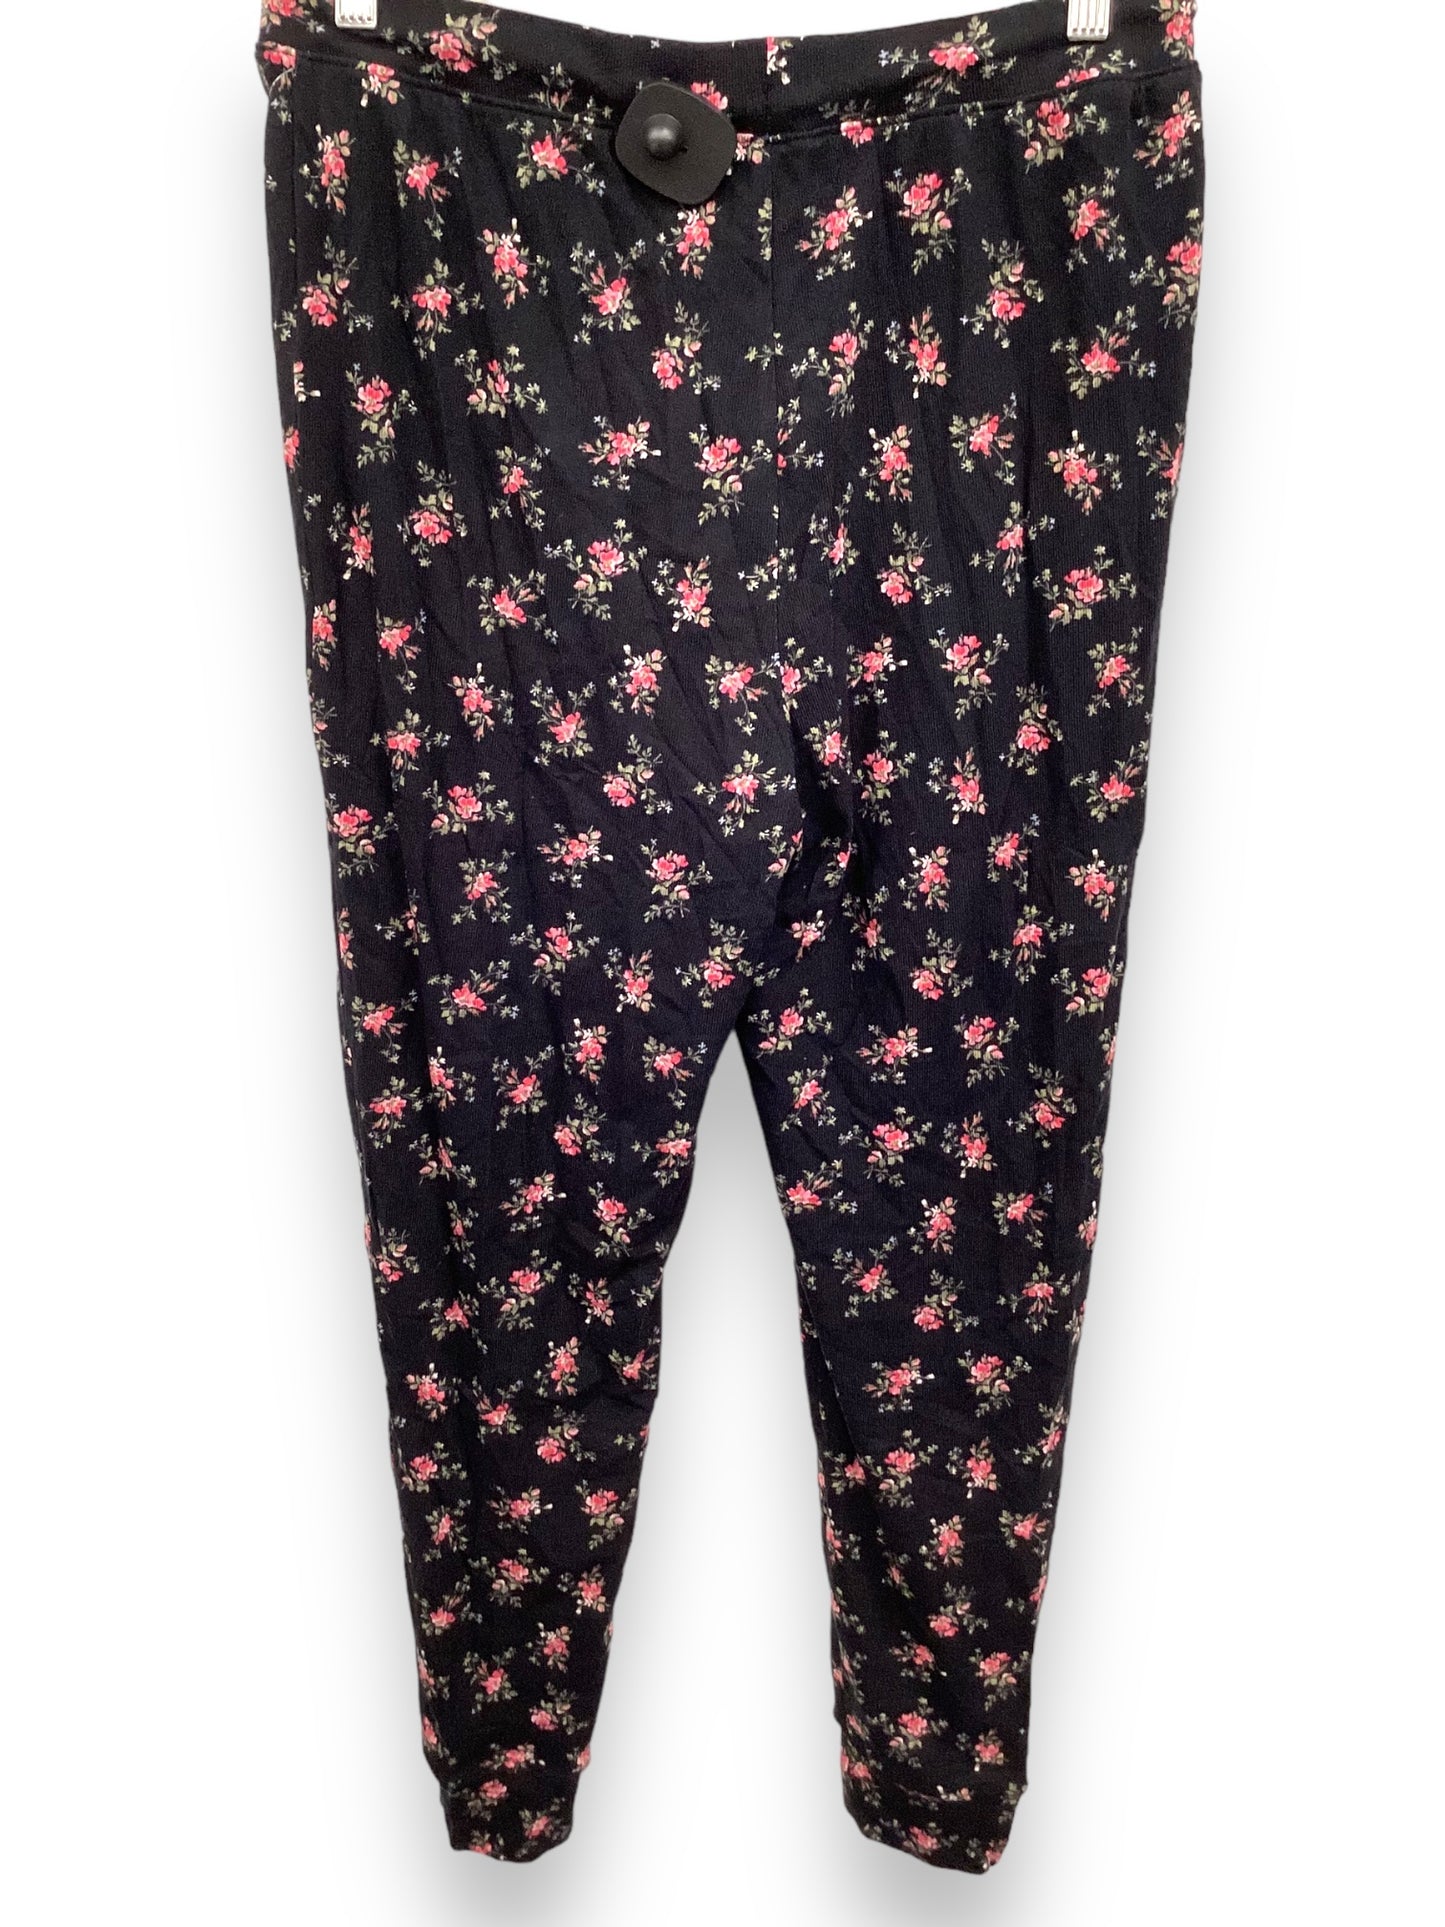 Pajamas 2pc By Lauren By Ralph Lauren  Size: M